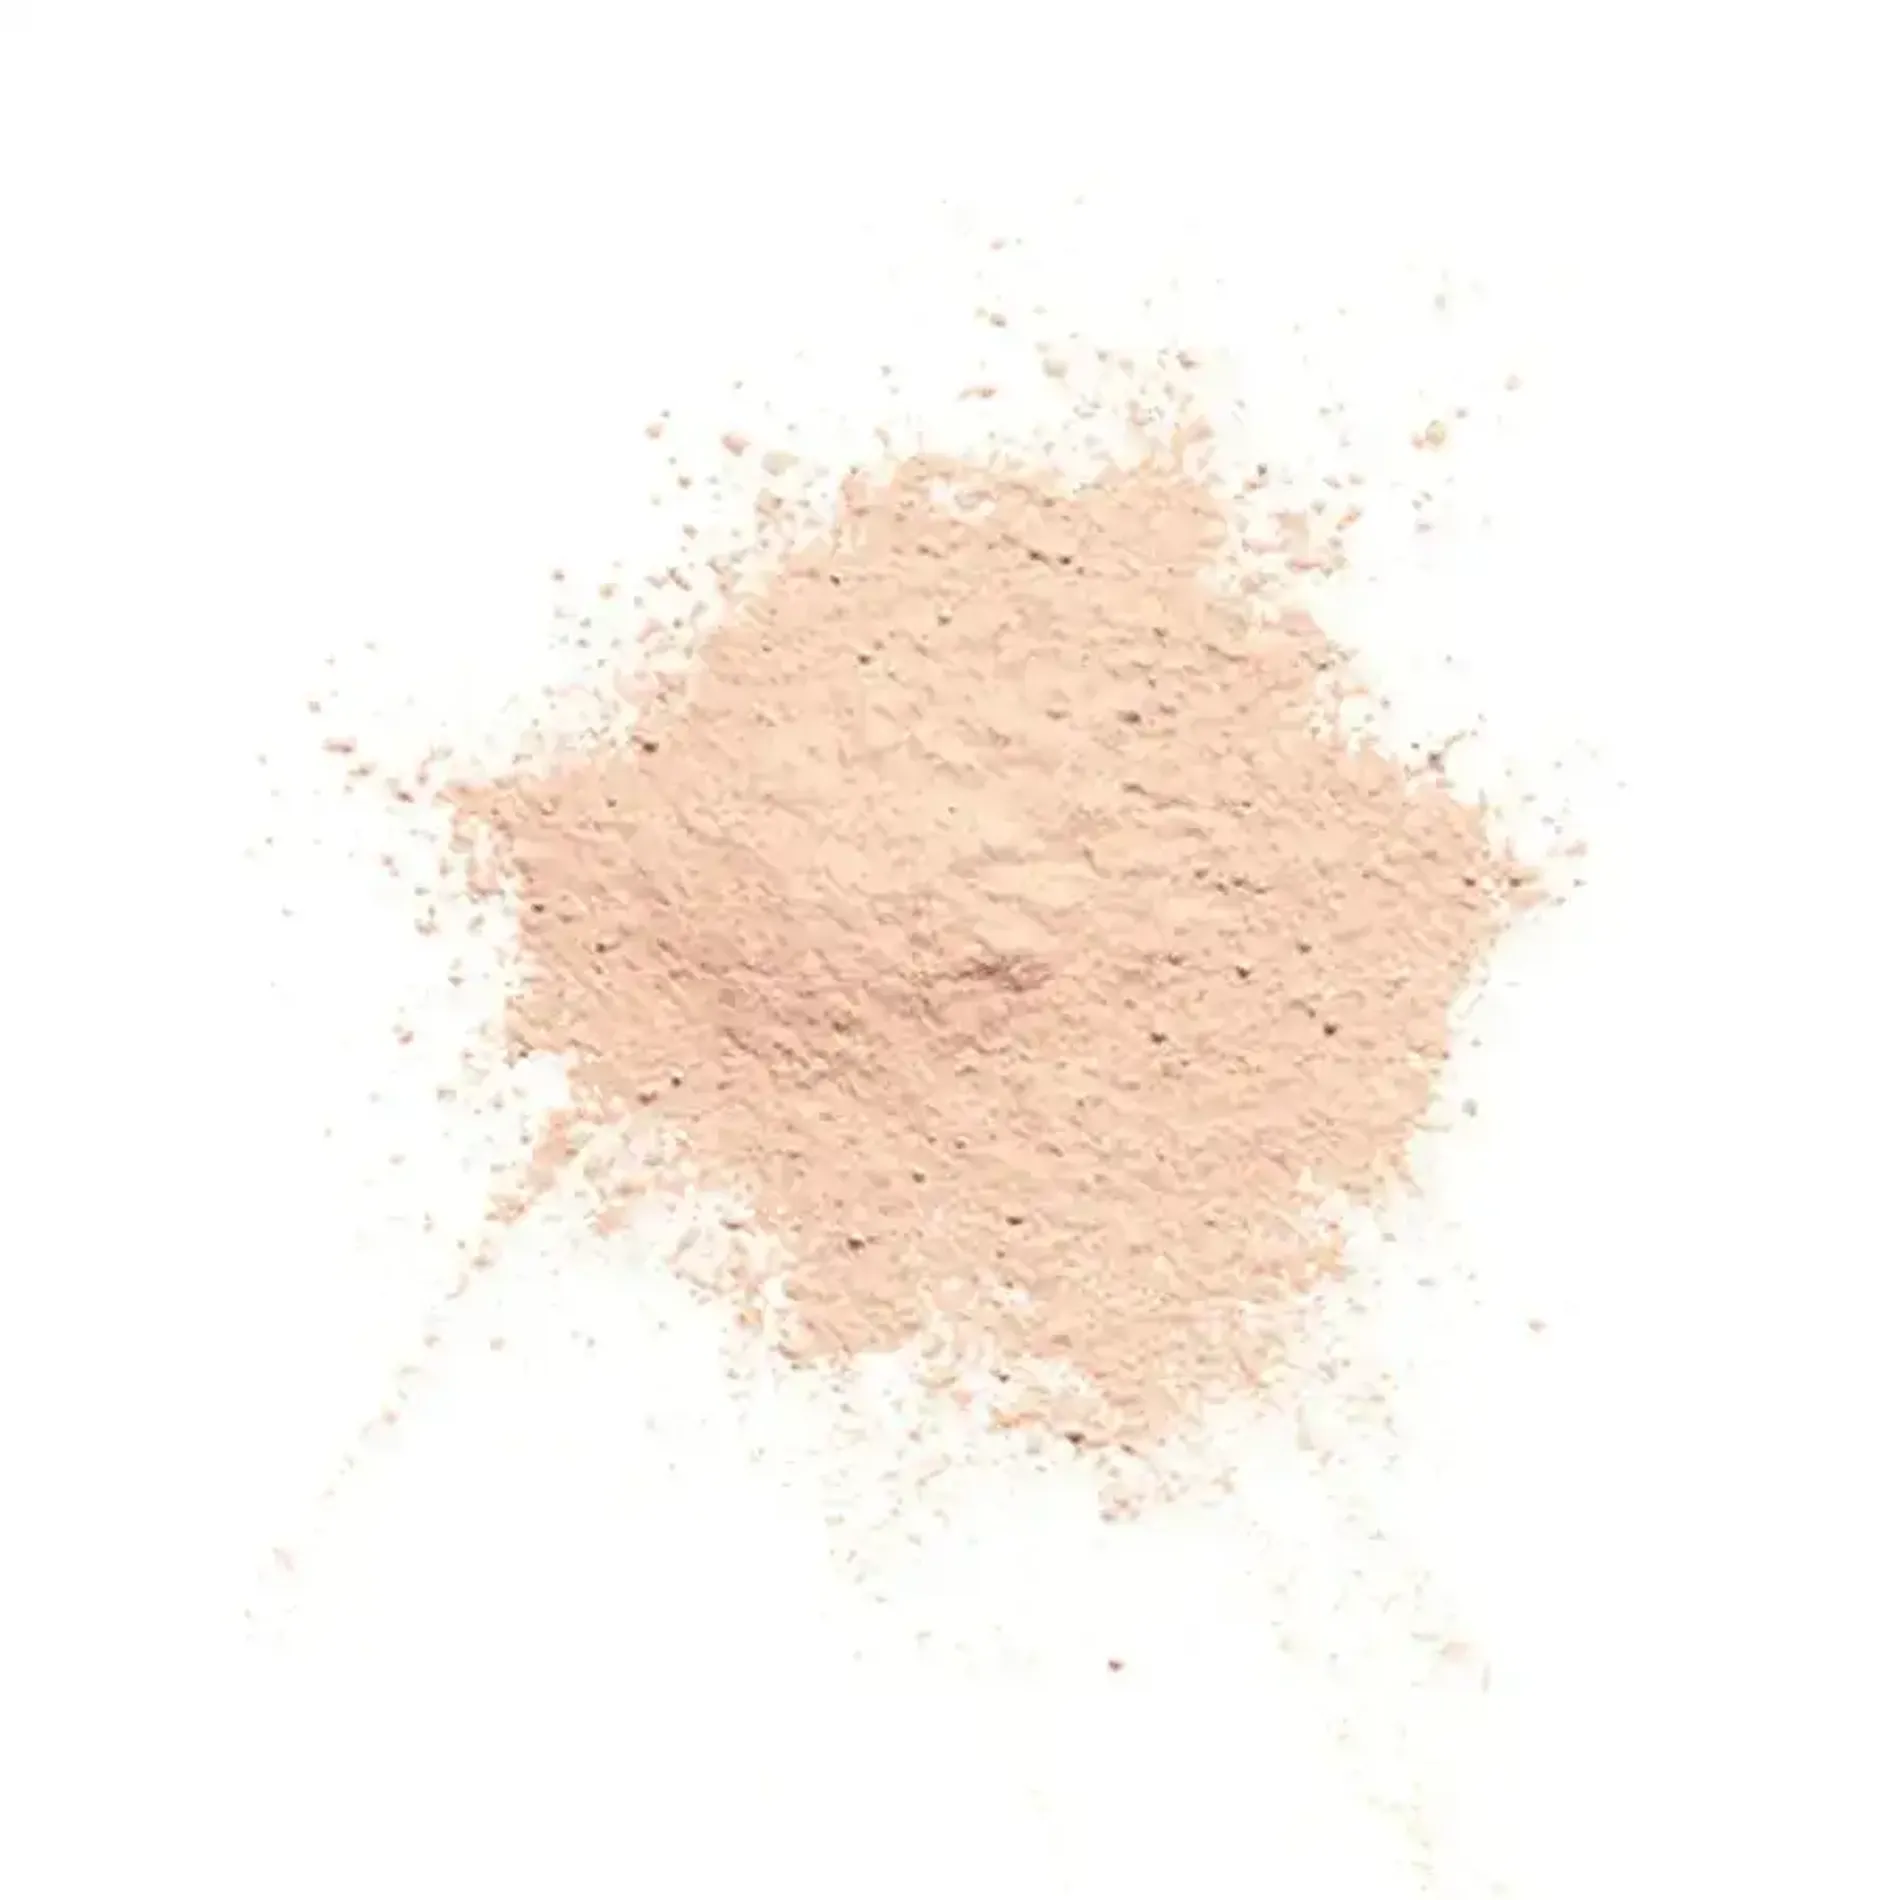 phan-phu-trang-diem-banila-co-prime-primer-hydrating-finish-powder-12g-4